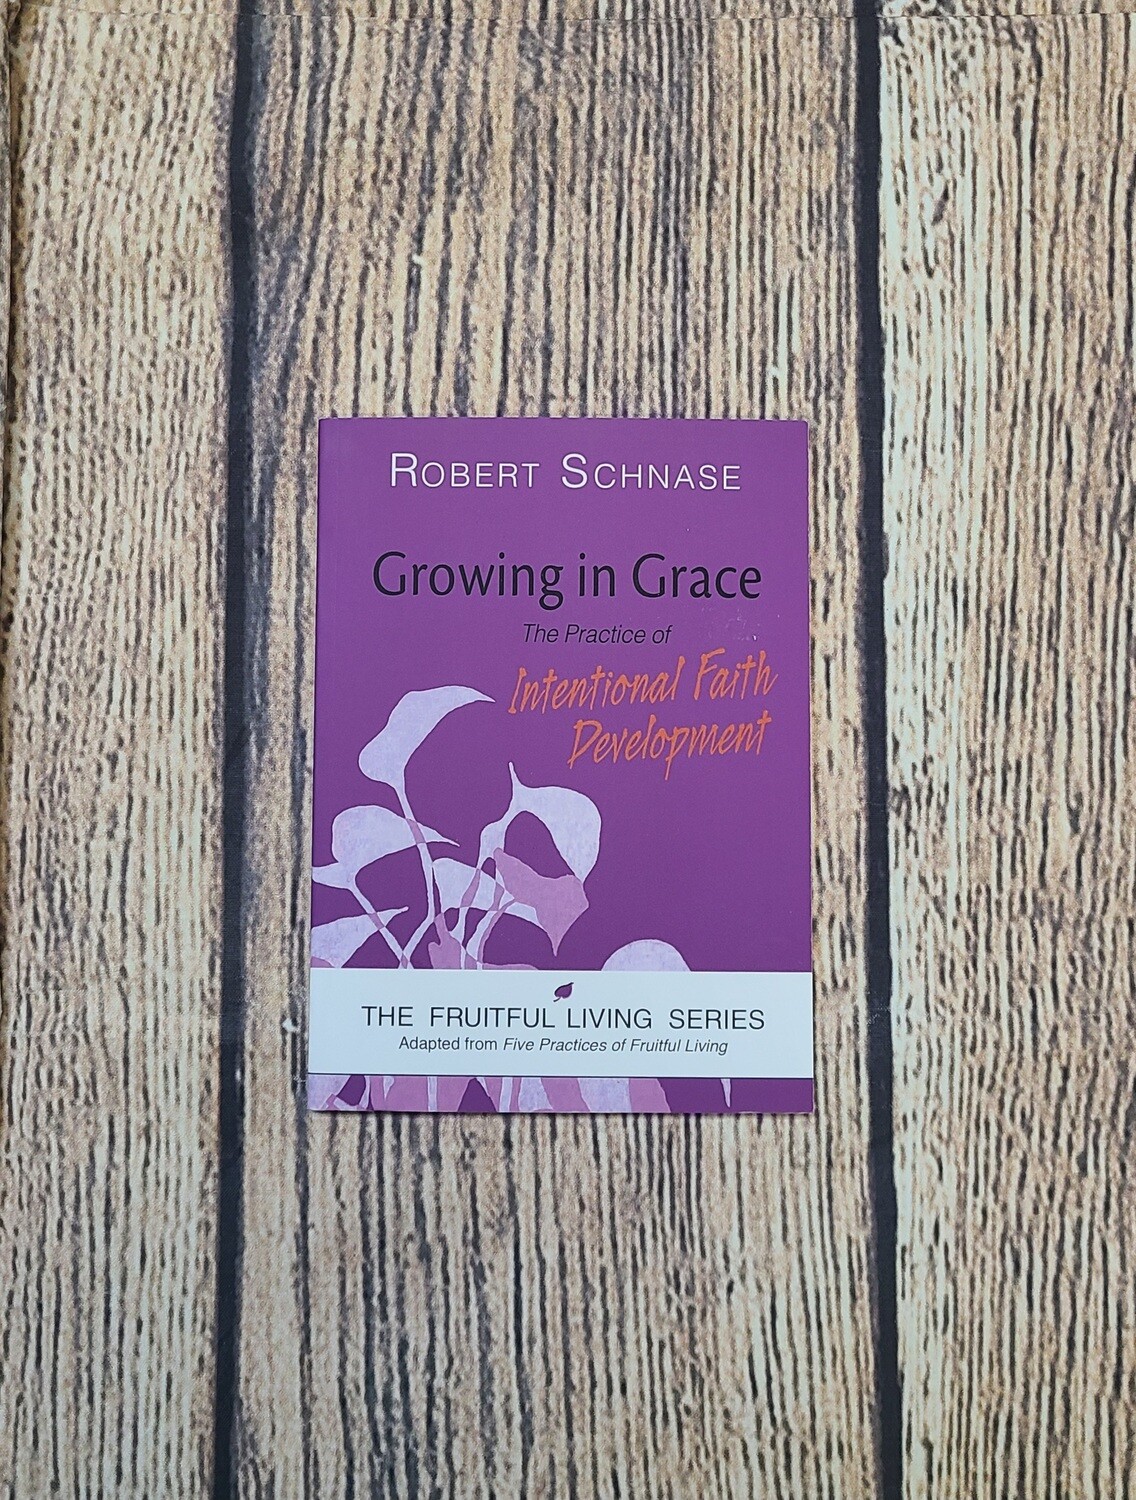 Growing in Grace by Robert Schnase